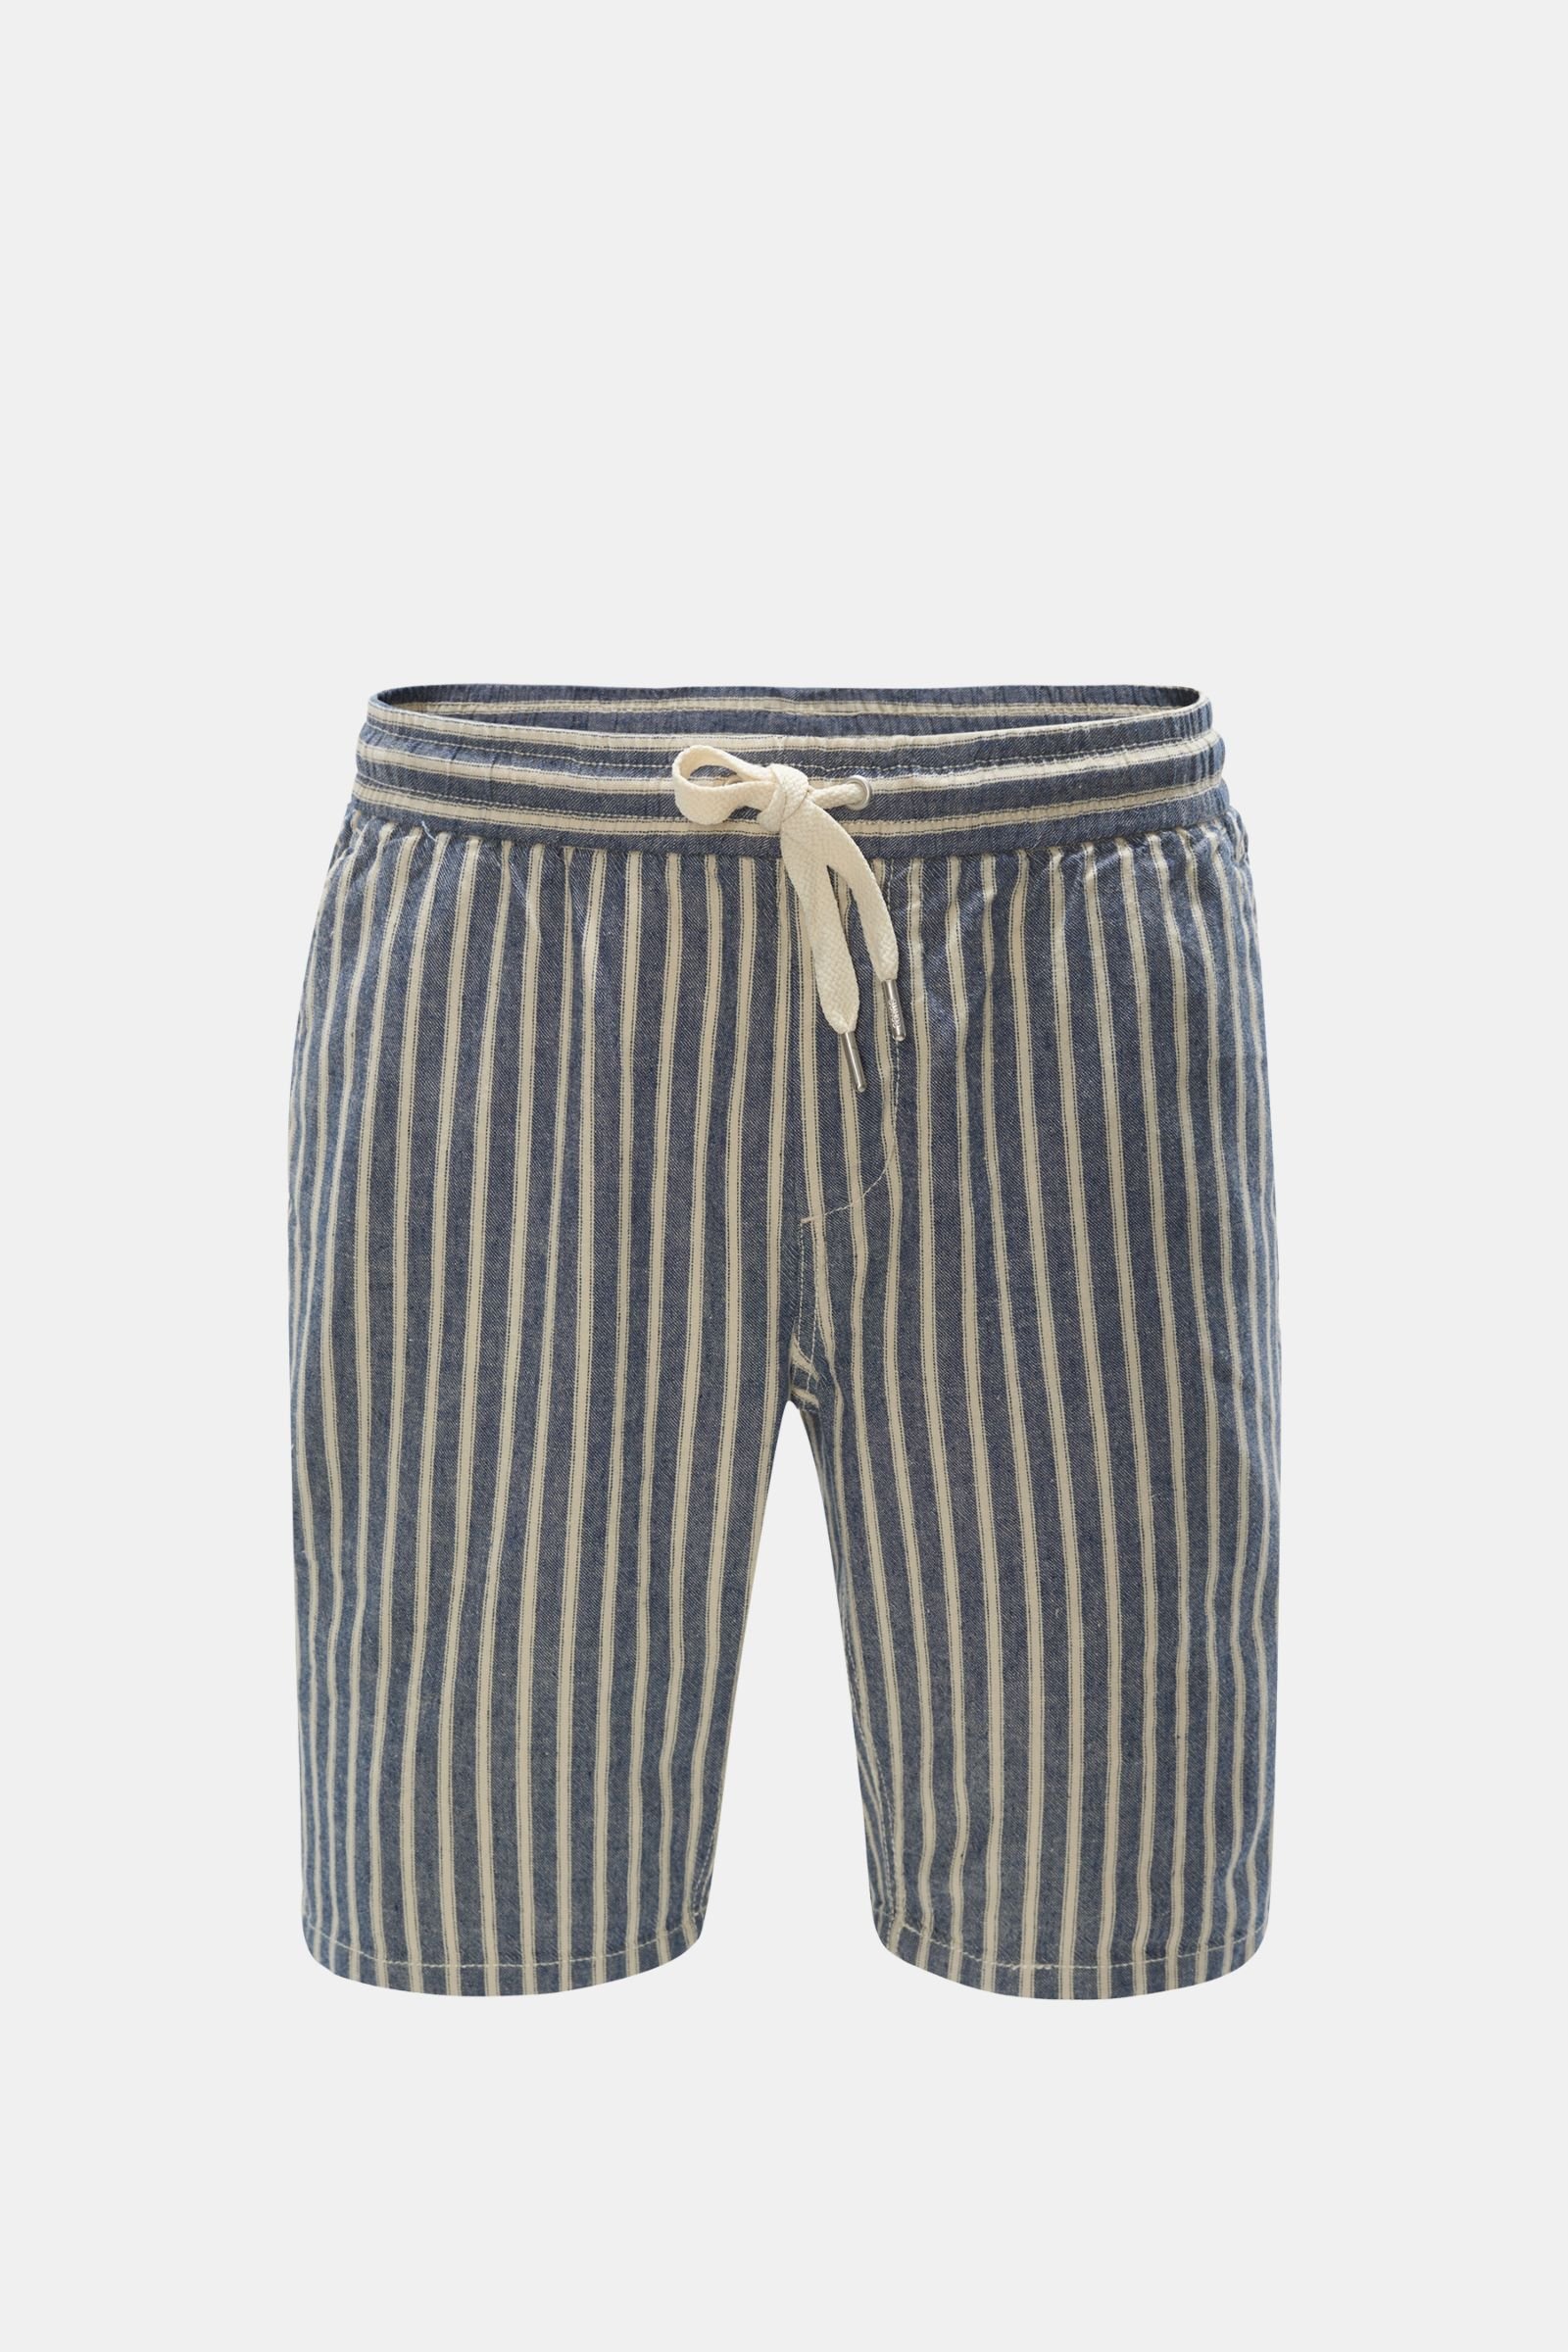 Bermuda shorts navy/cream striped